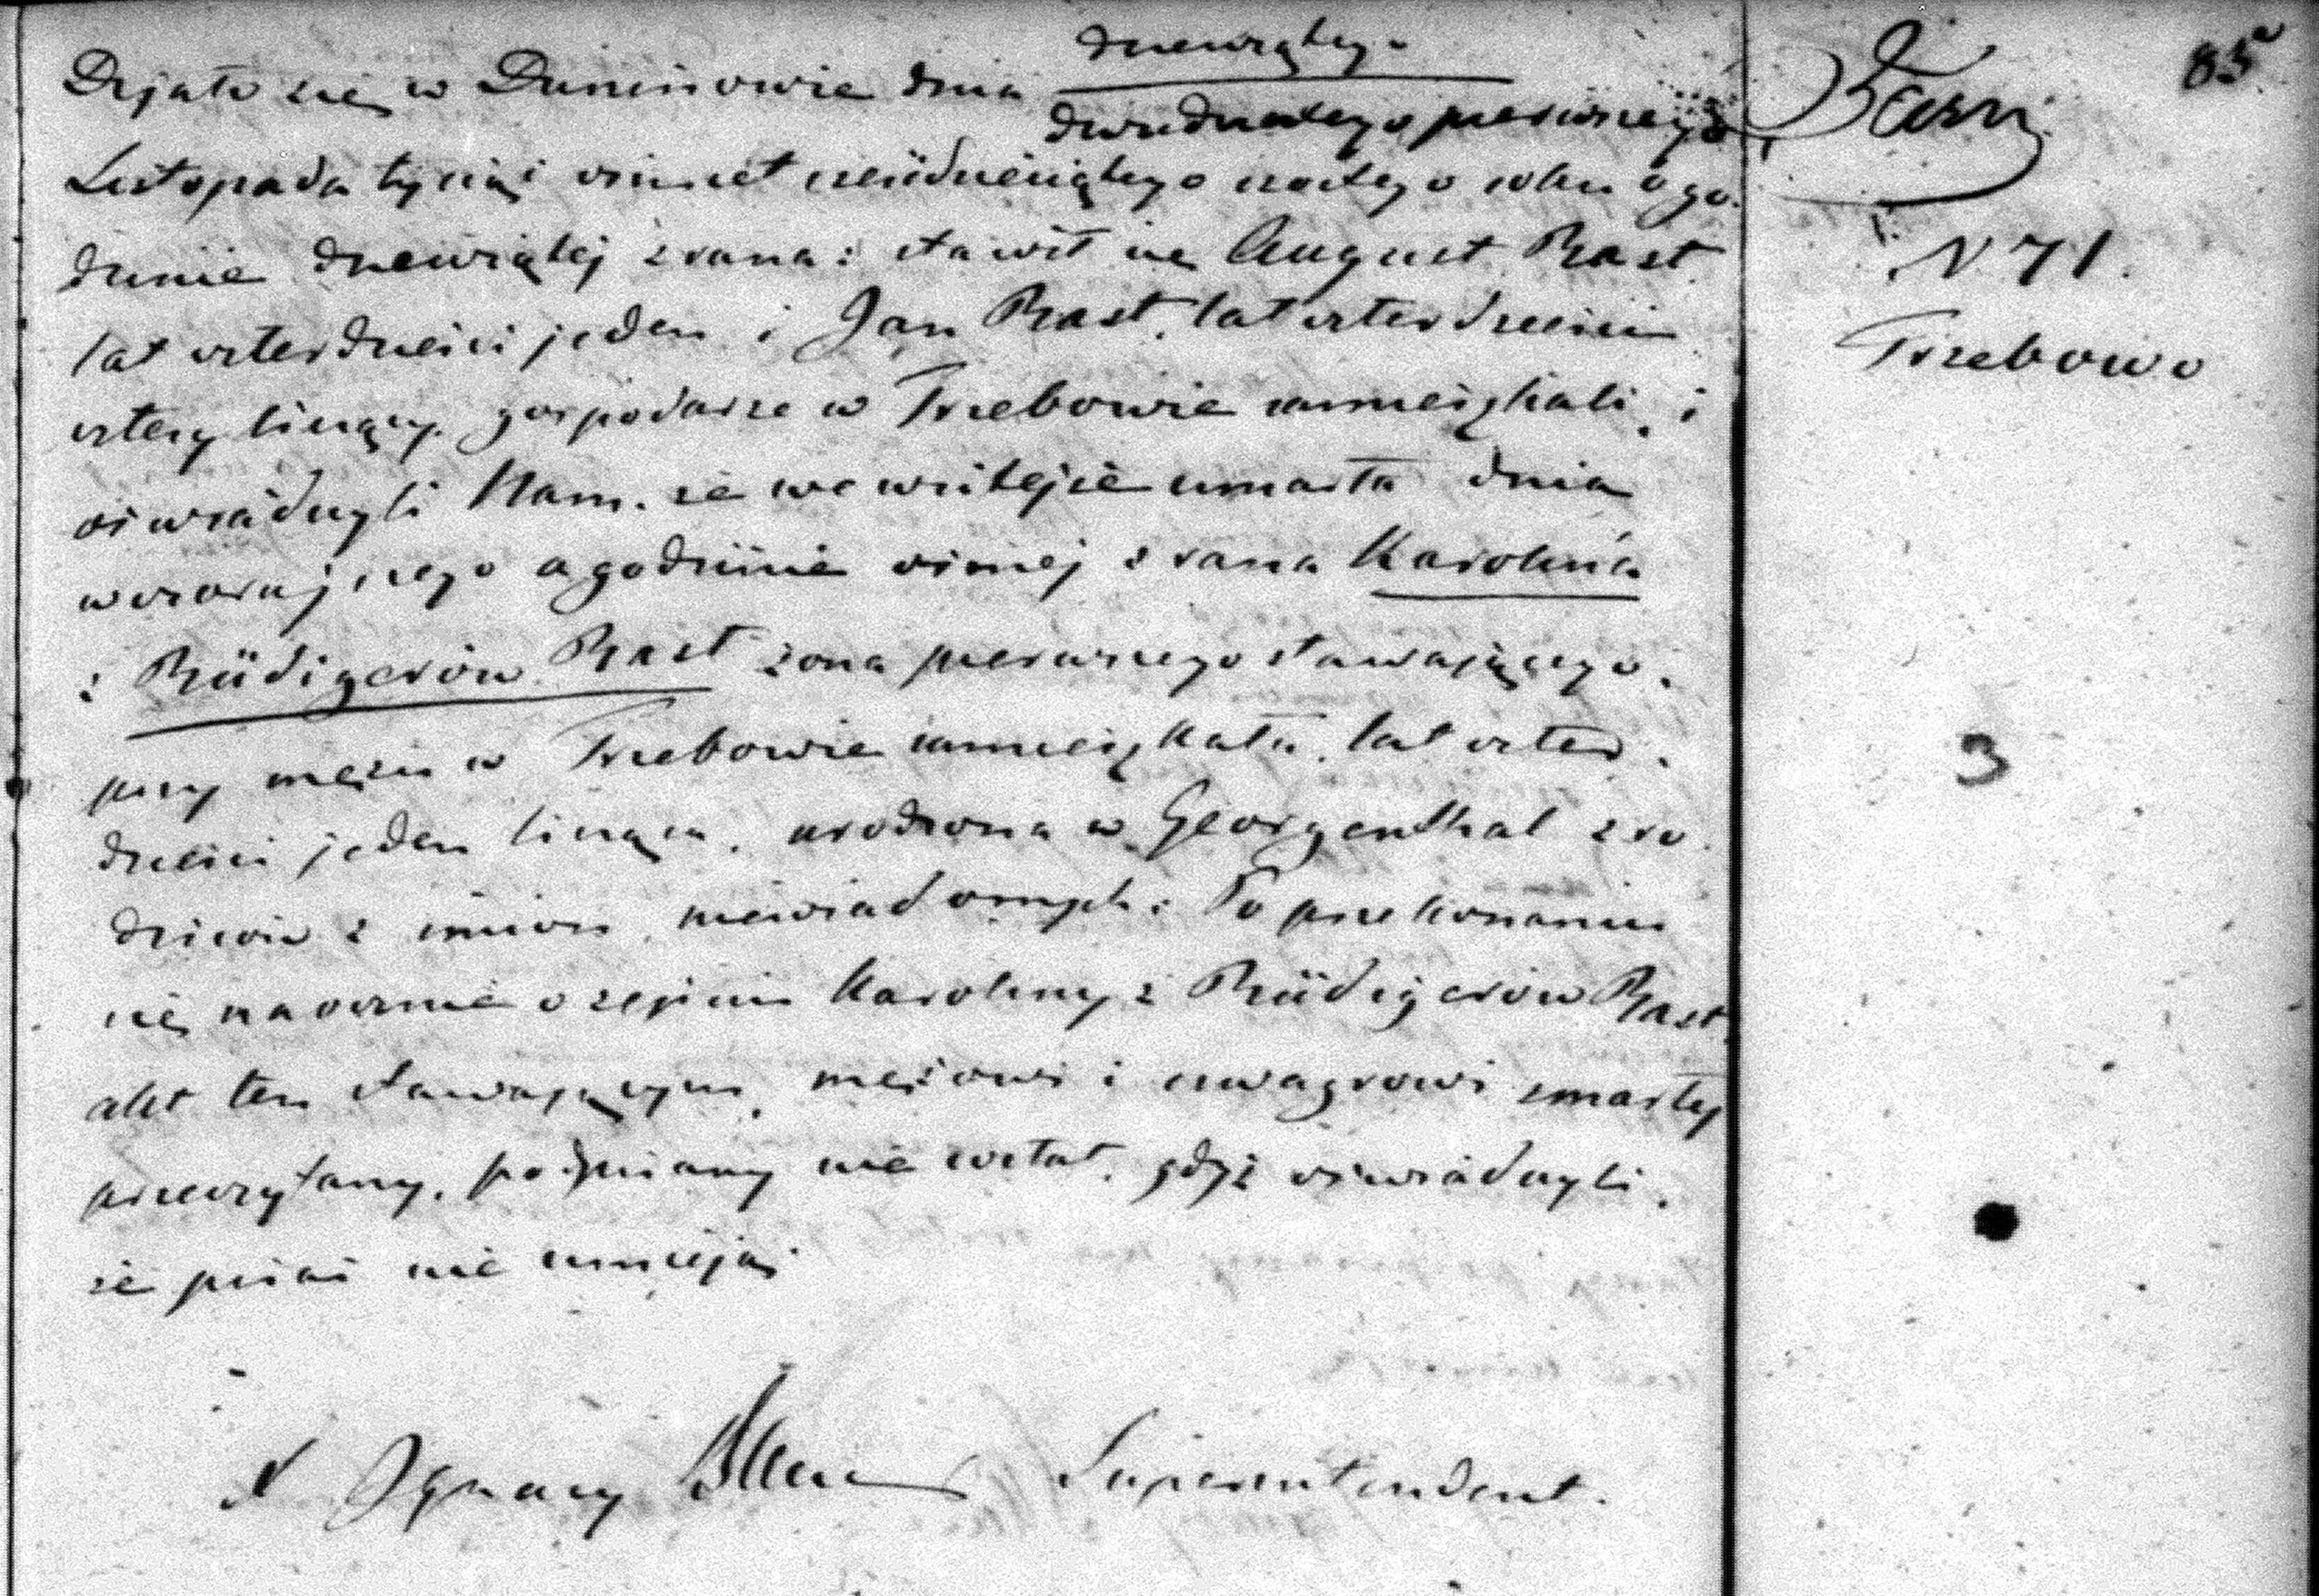 1866 - Karoline Ru?diger Rast Death Record.jpg